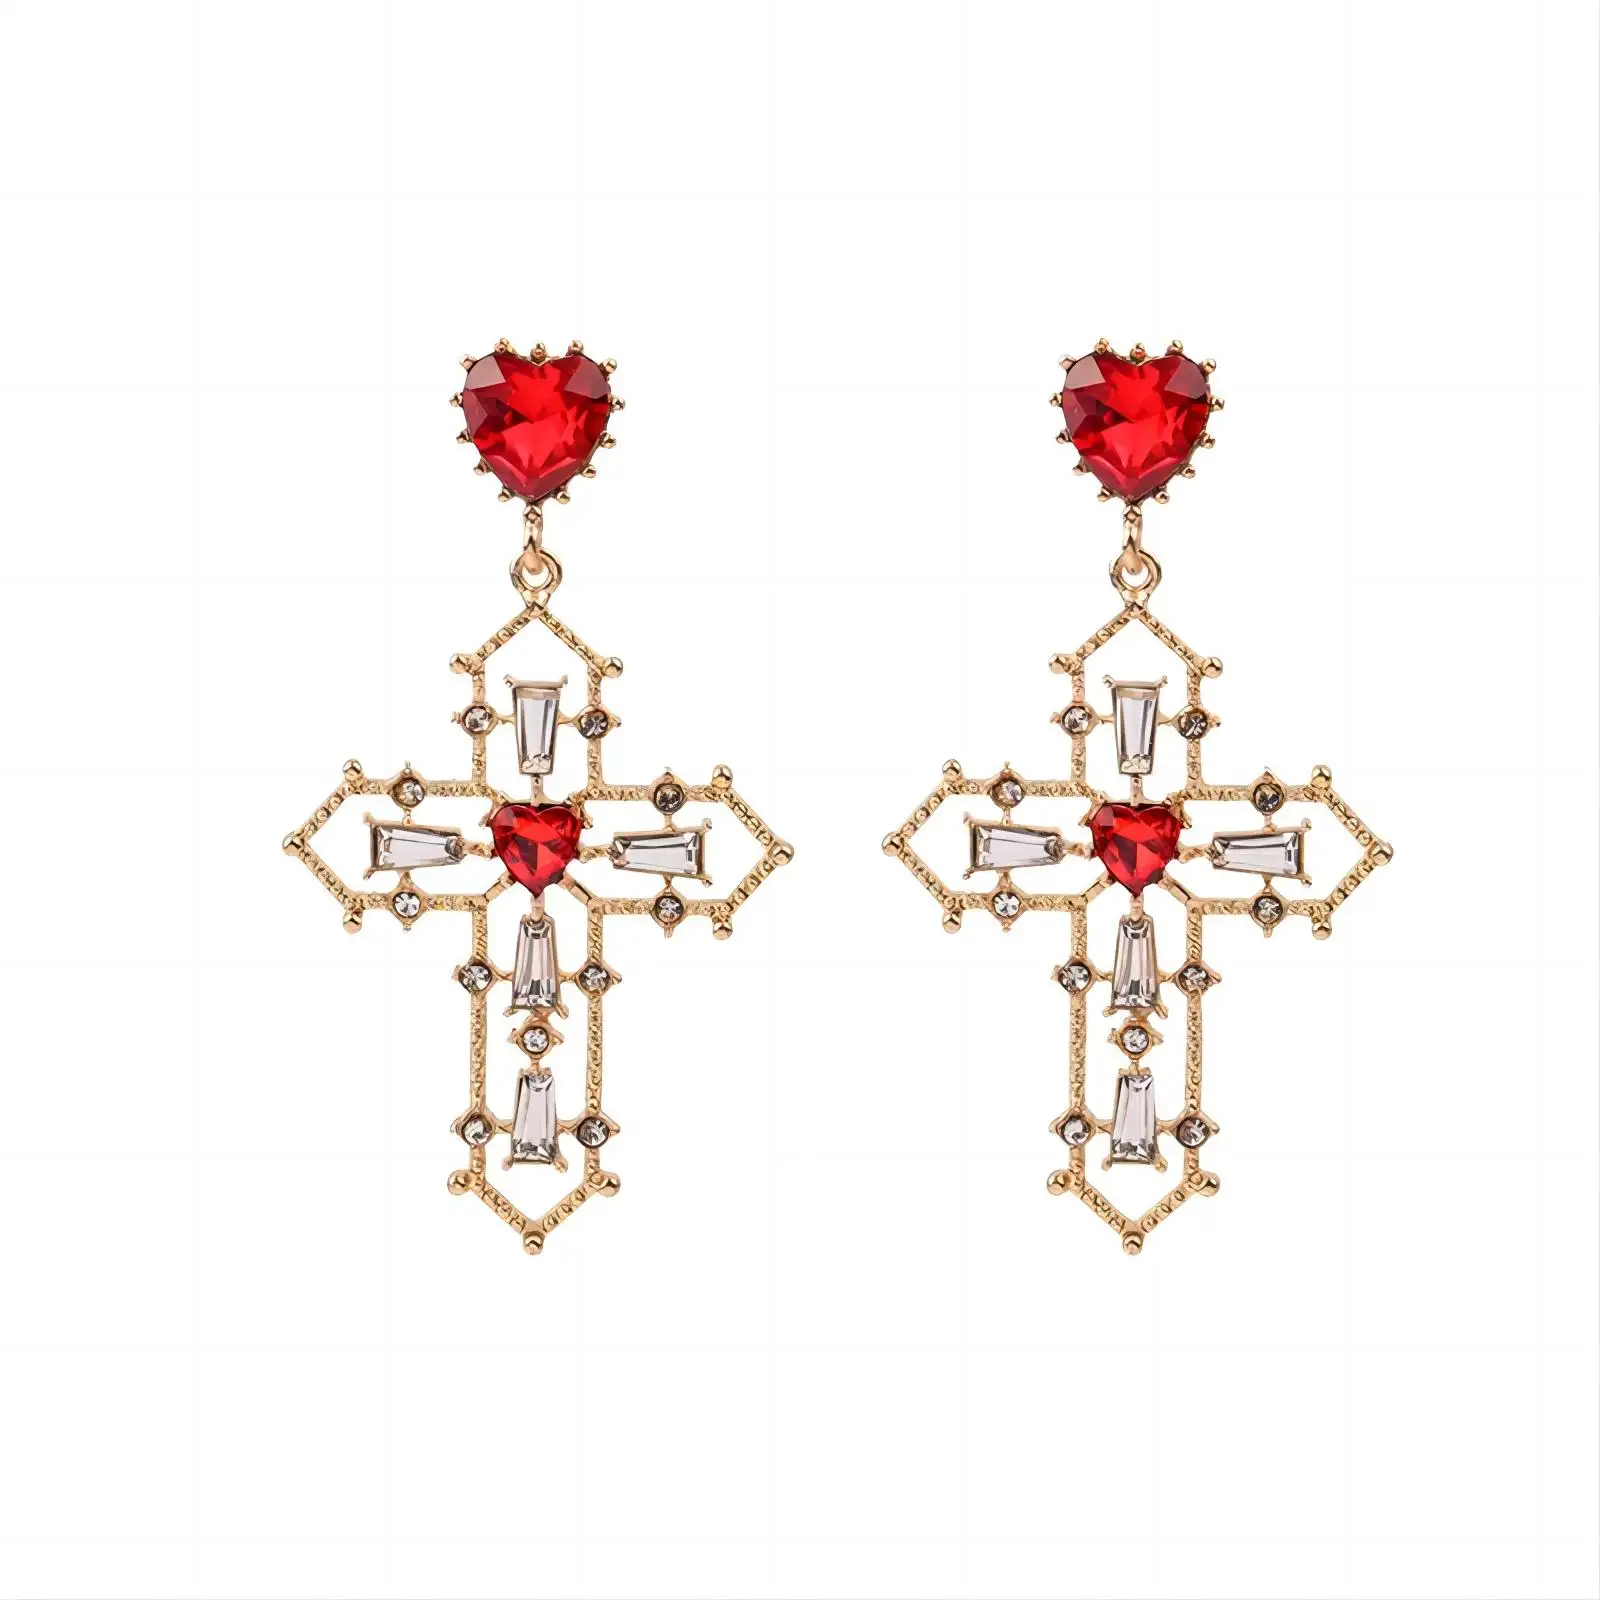 New Vintage Red Heart Crystal Ruby Baroque Pendant Rhinestone Dangle Cross Drop Earrings for Women